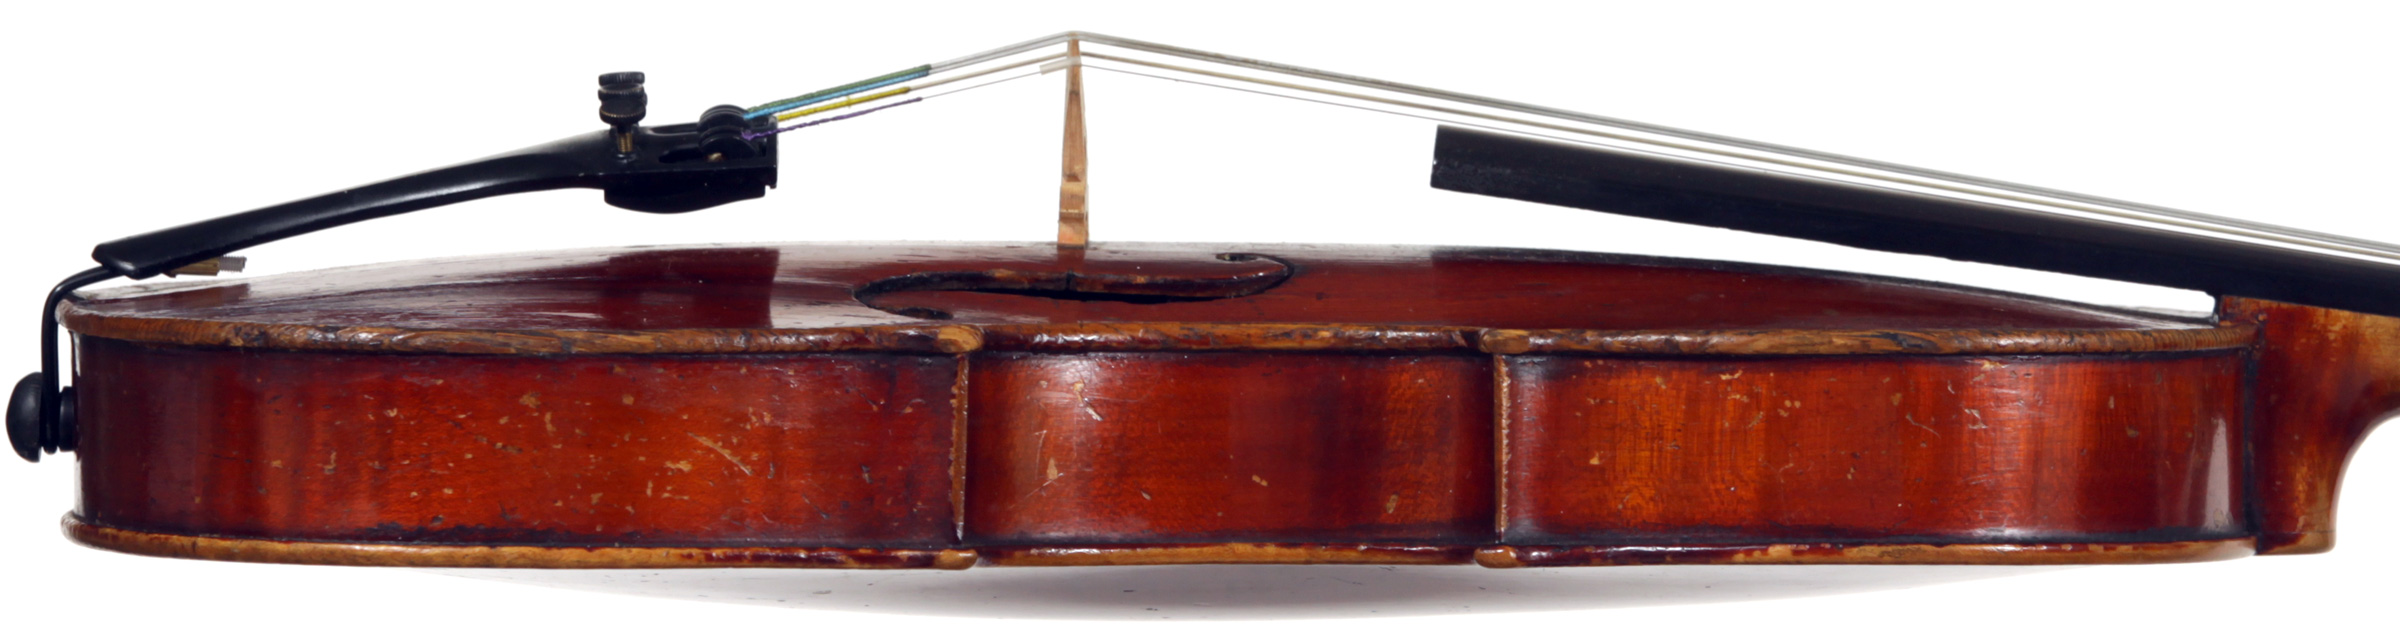 Violins on Sale - Parisien JTL - The Violin Connection of Southern